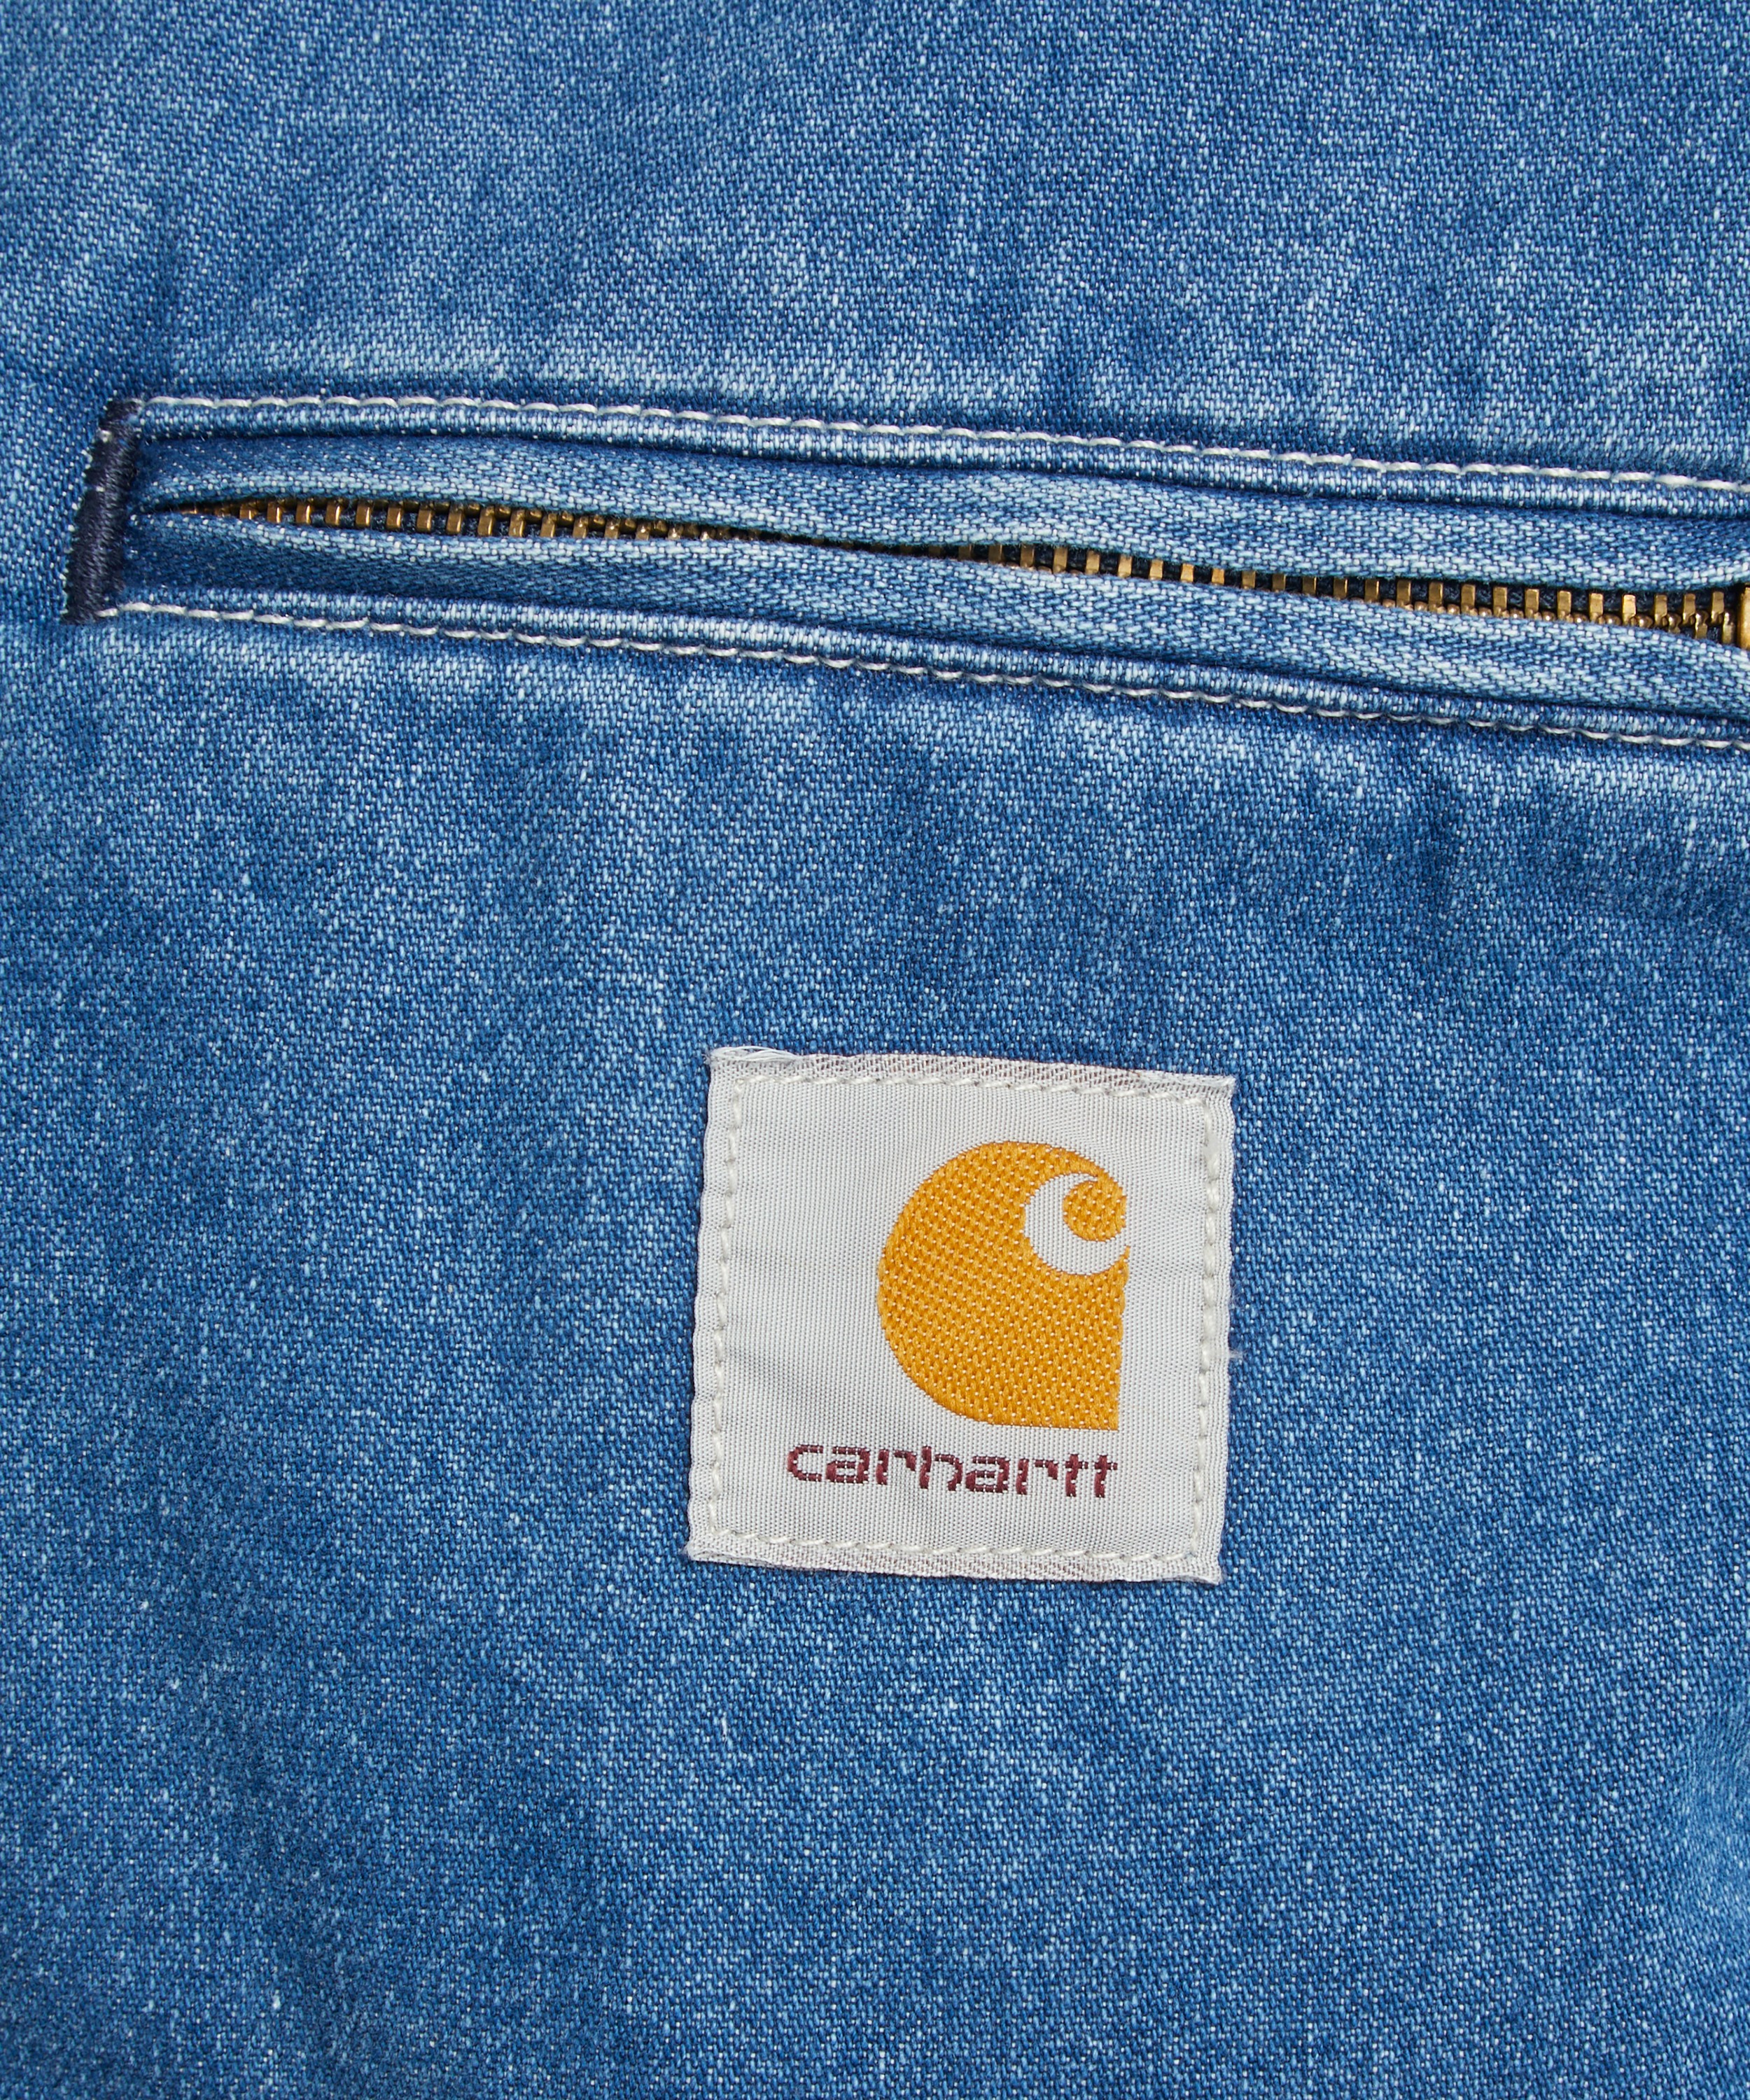 Carhartt jeans pants mens - Gem